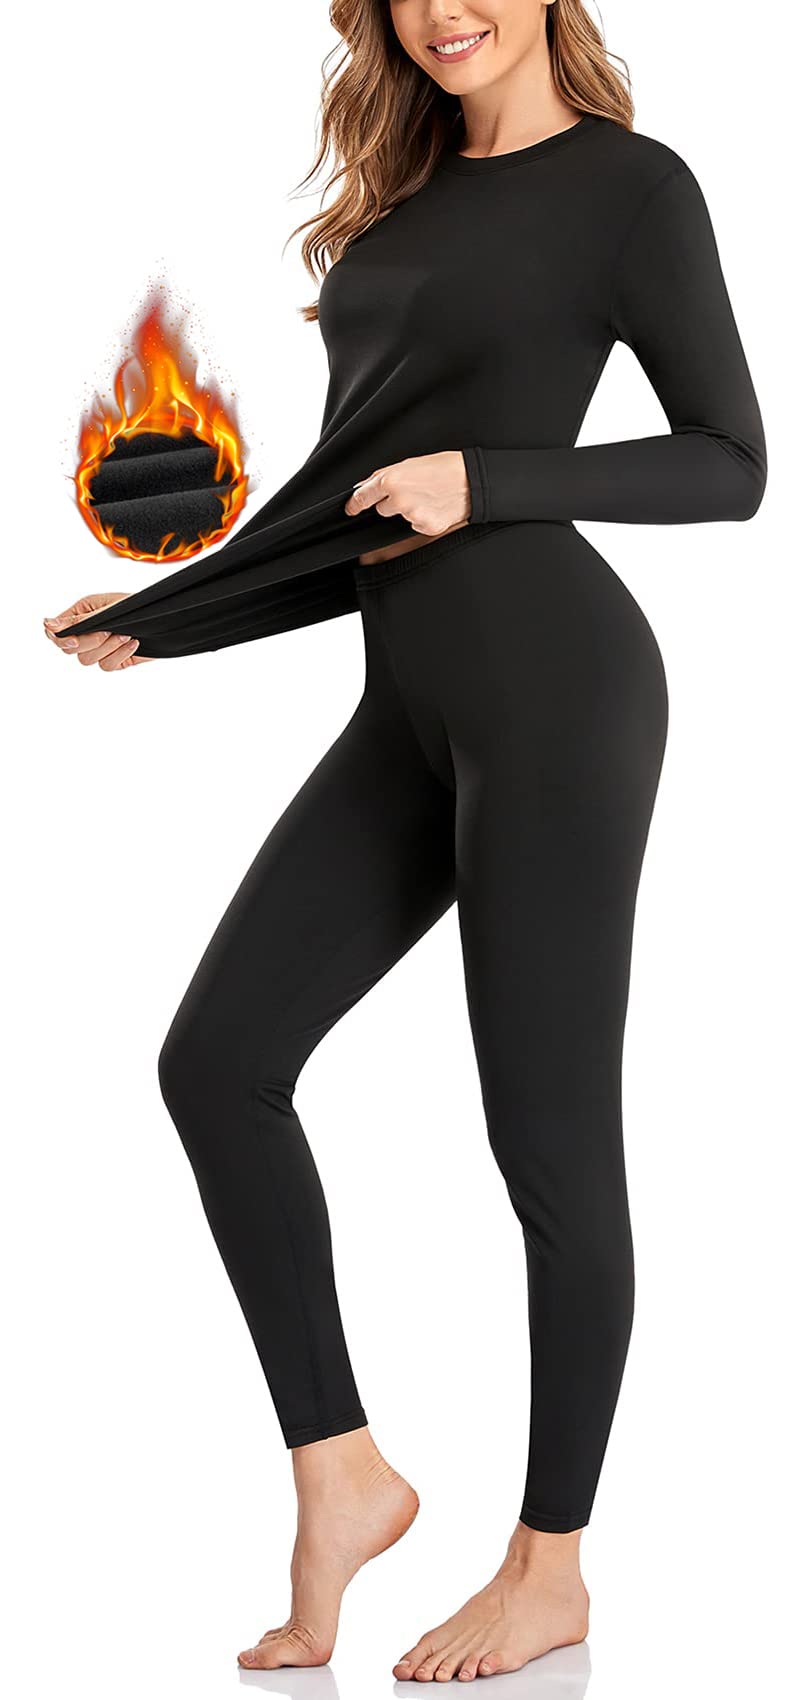 HEROBIKER Thermal Underwear Women Ultra-Soft Set Base Layer Top & Bottom  Long Johns with Fleece Lined Winter Warm, Black, Small